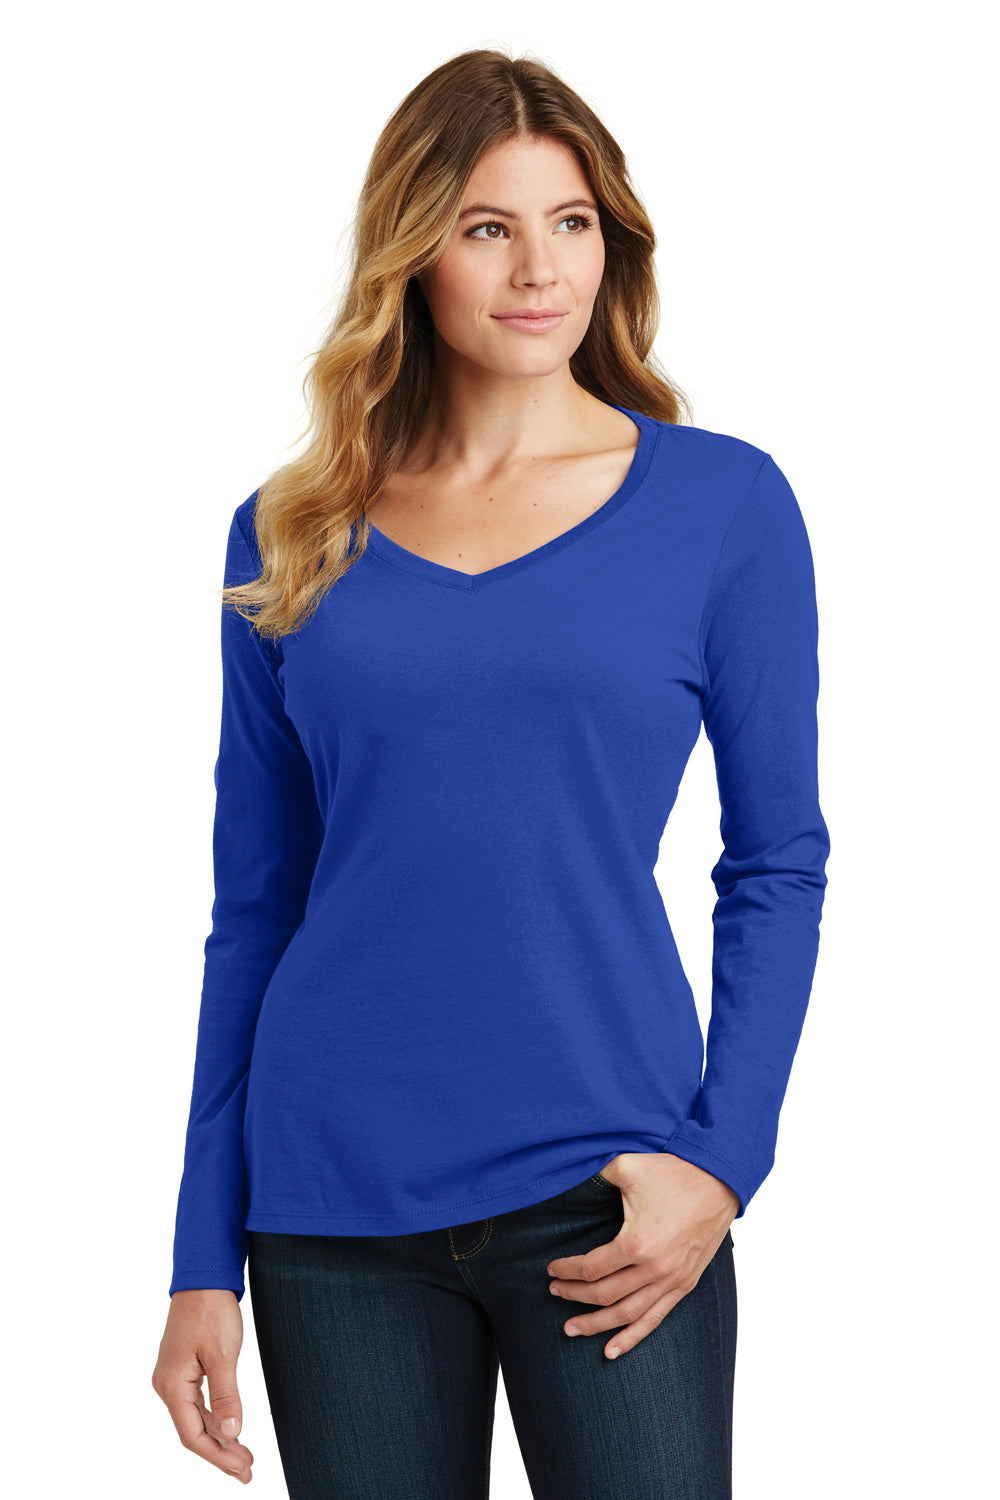 Port & Company LPC450VLS Womens Fan Favorite Long Sleeve V-Neck T-Shirt Royal Blue Front